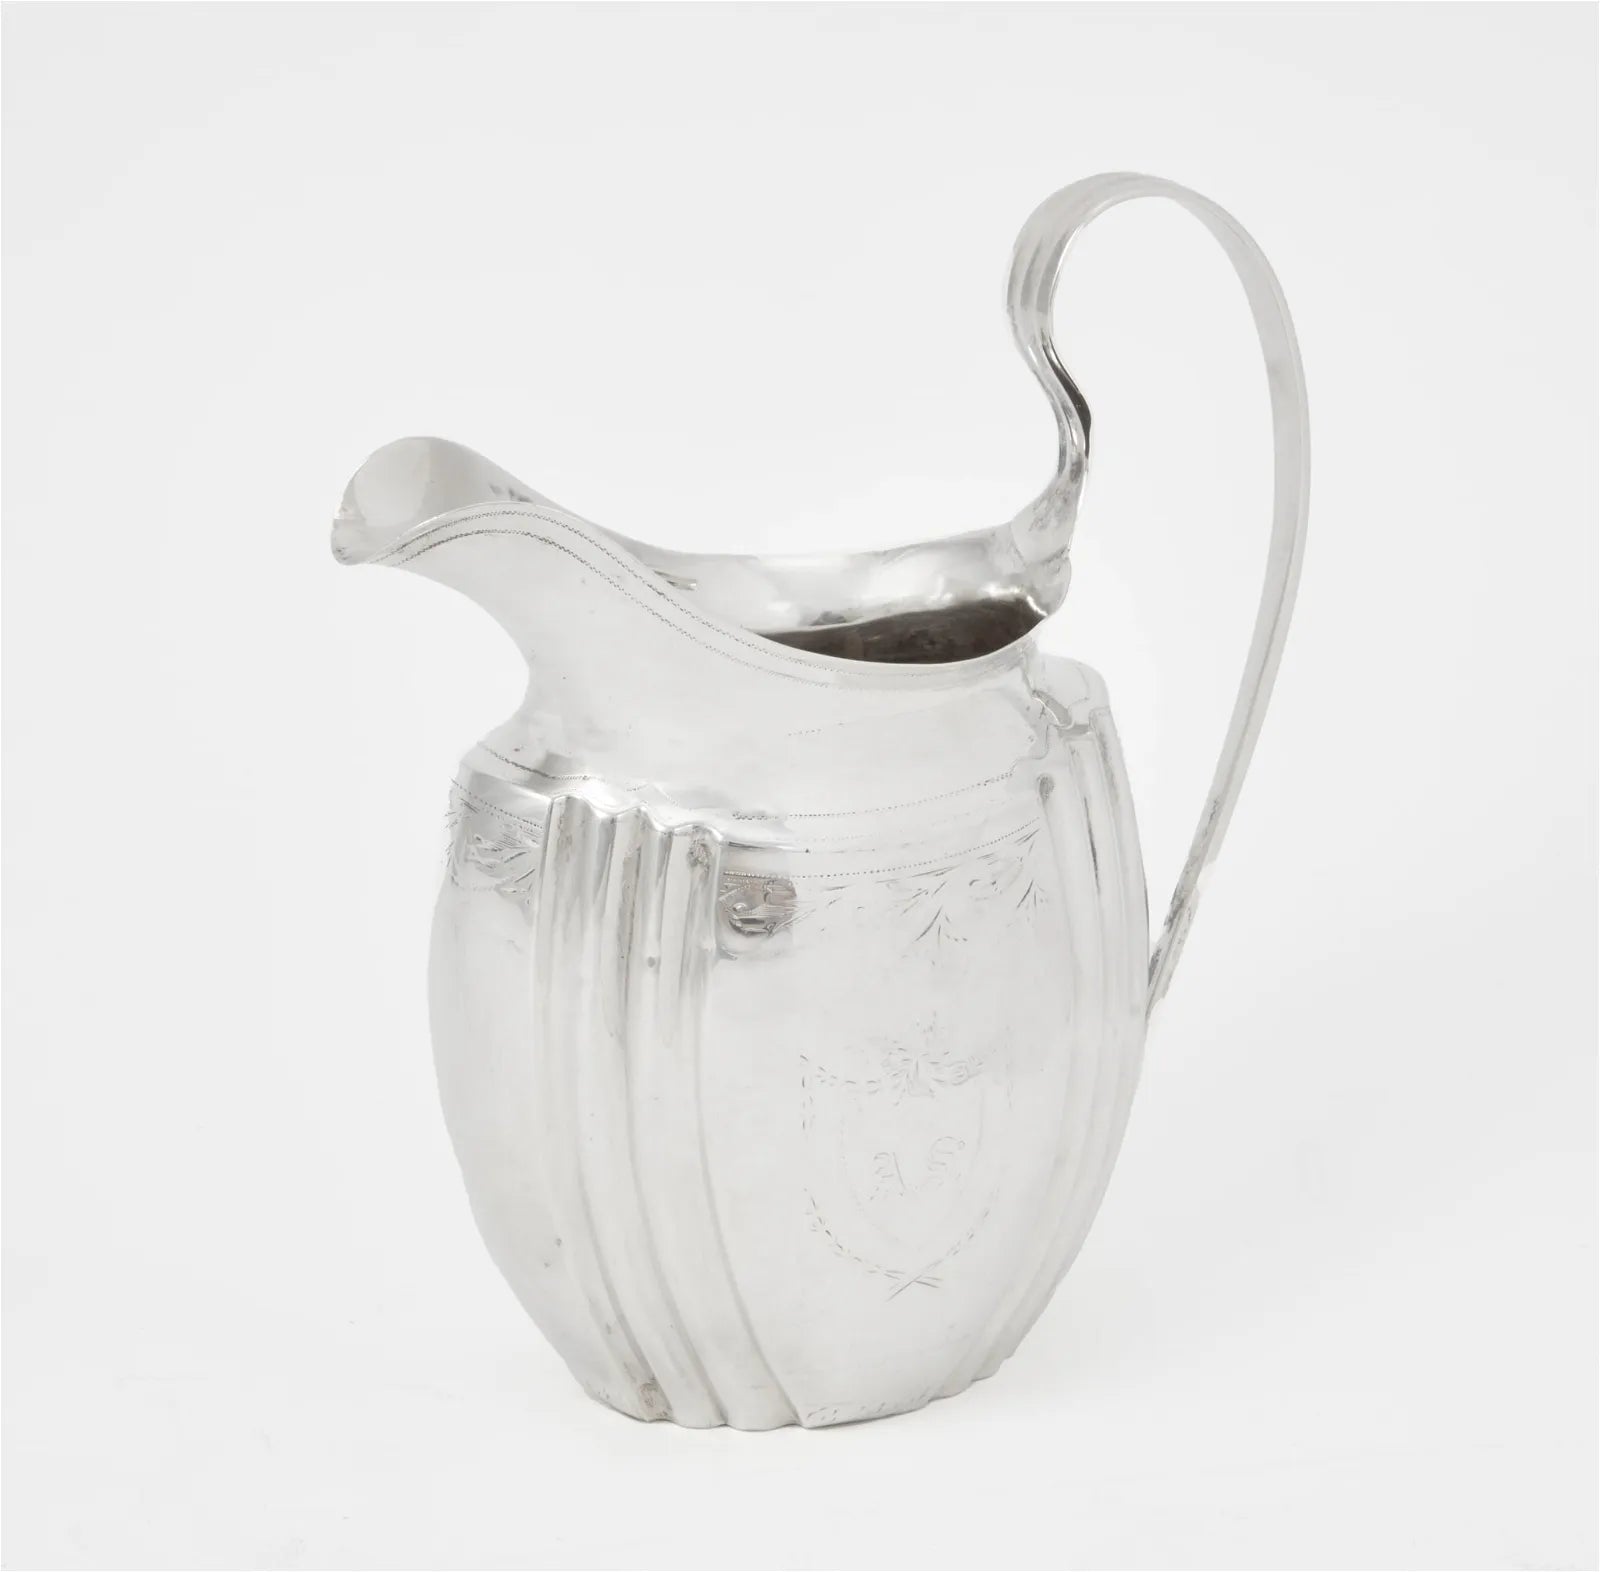 DA2-016: Late 18th Century American Sterling Silver Cream Jug - Attributed to Tunis Dubois, New York